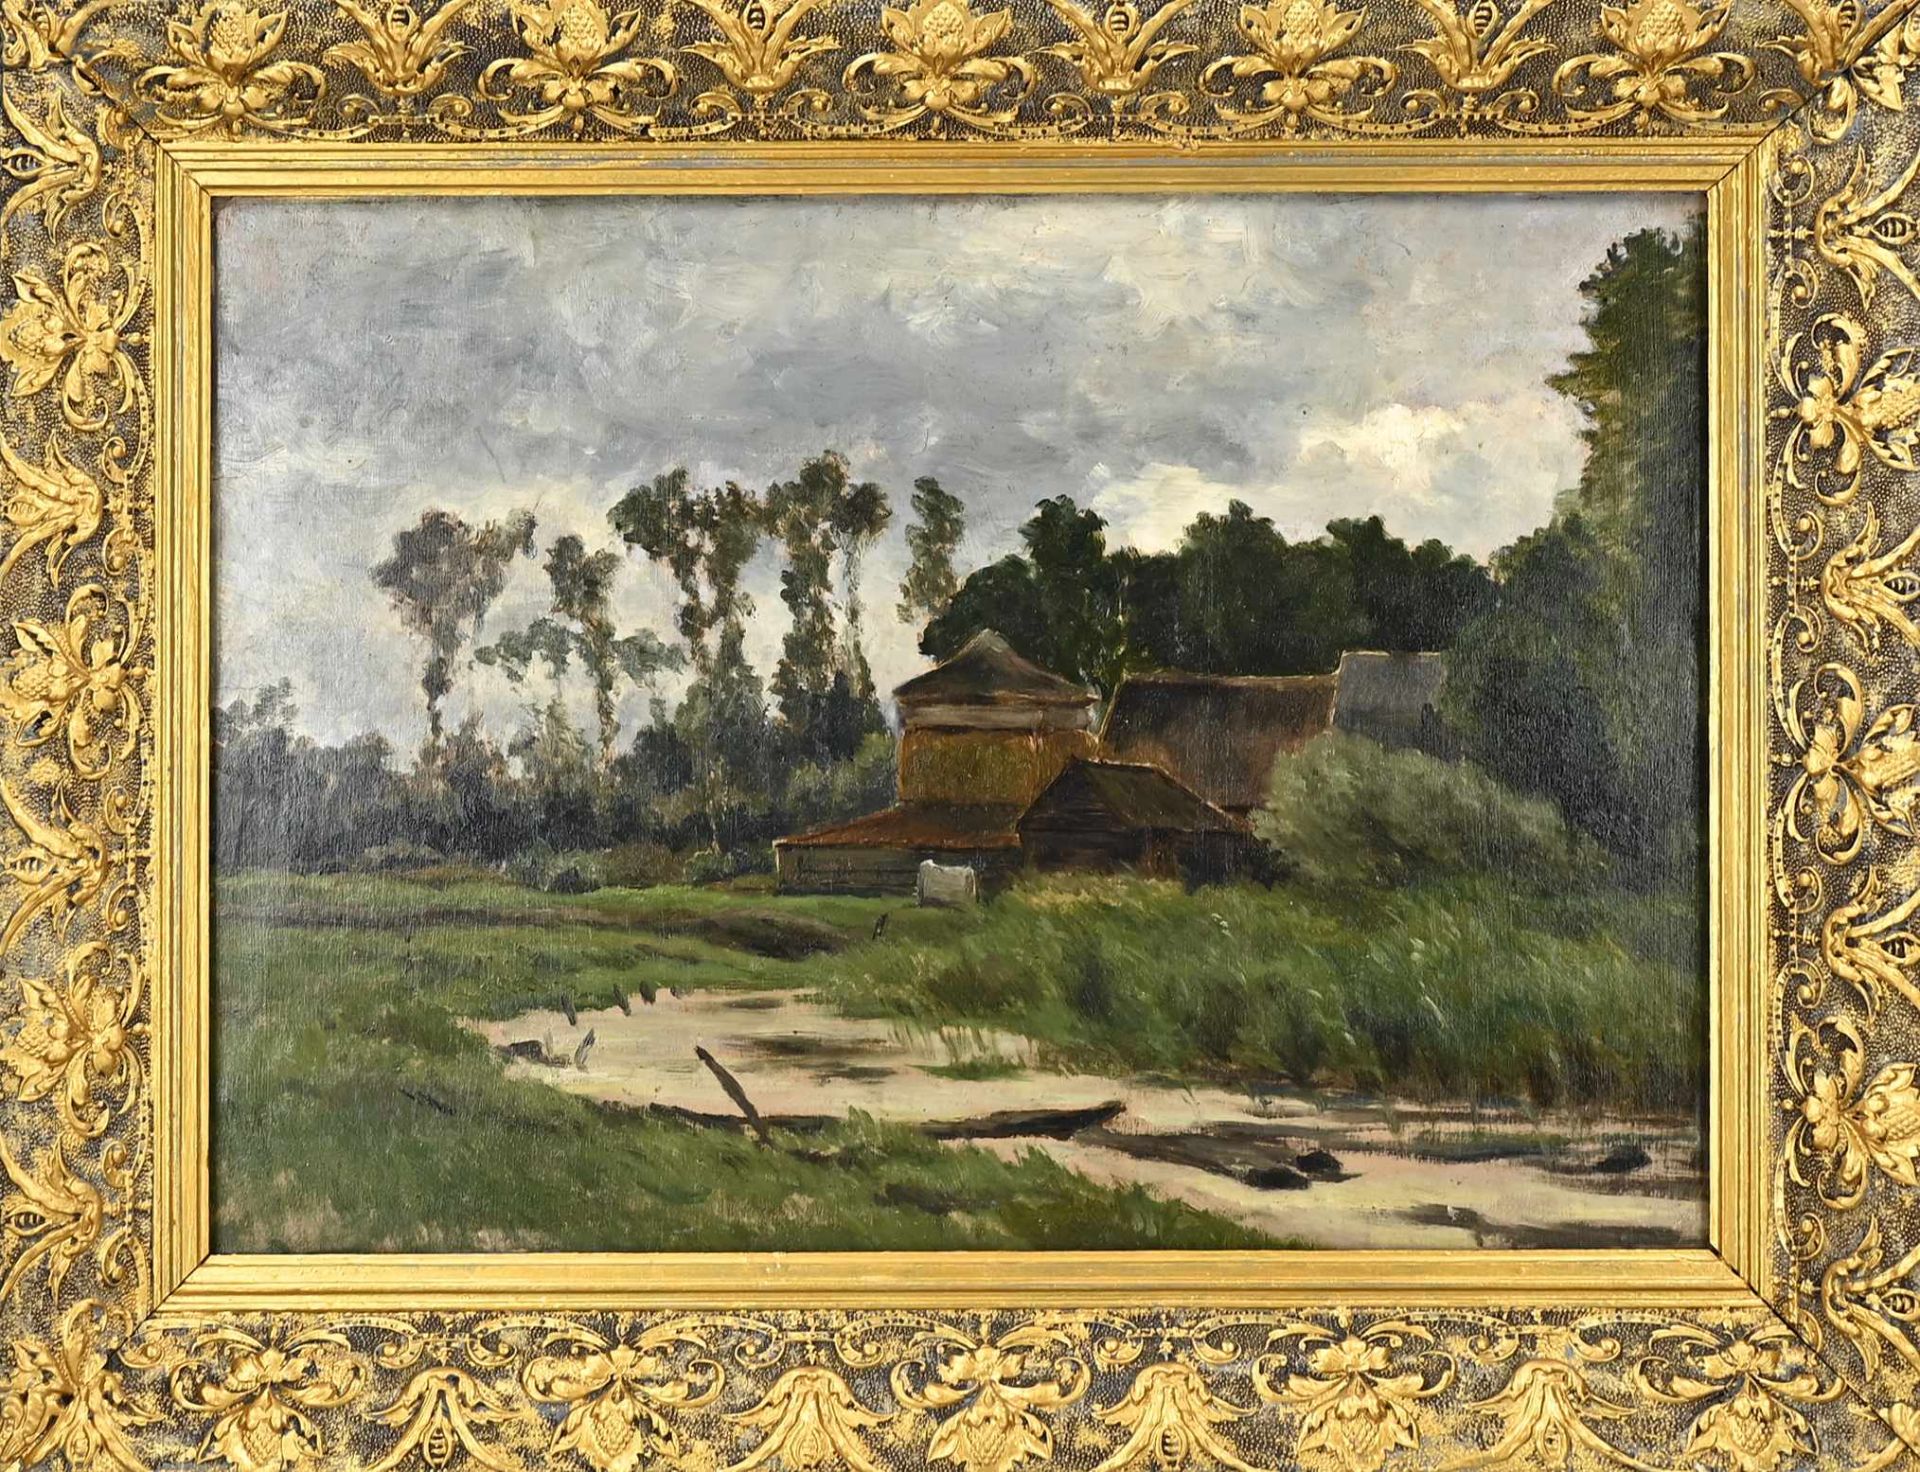 A. van Everdingen, Landscape